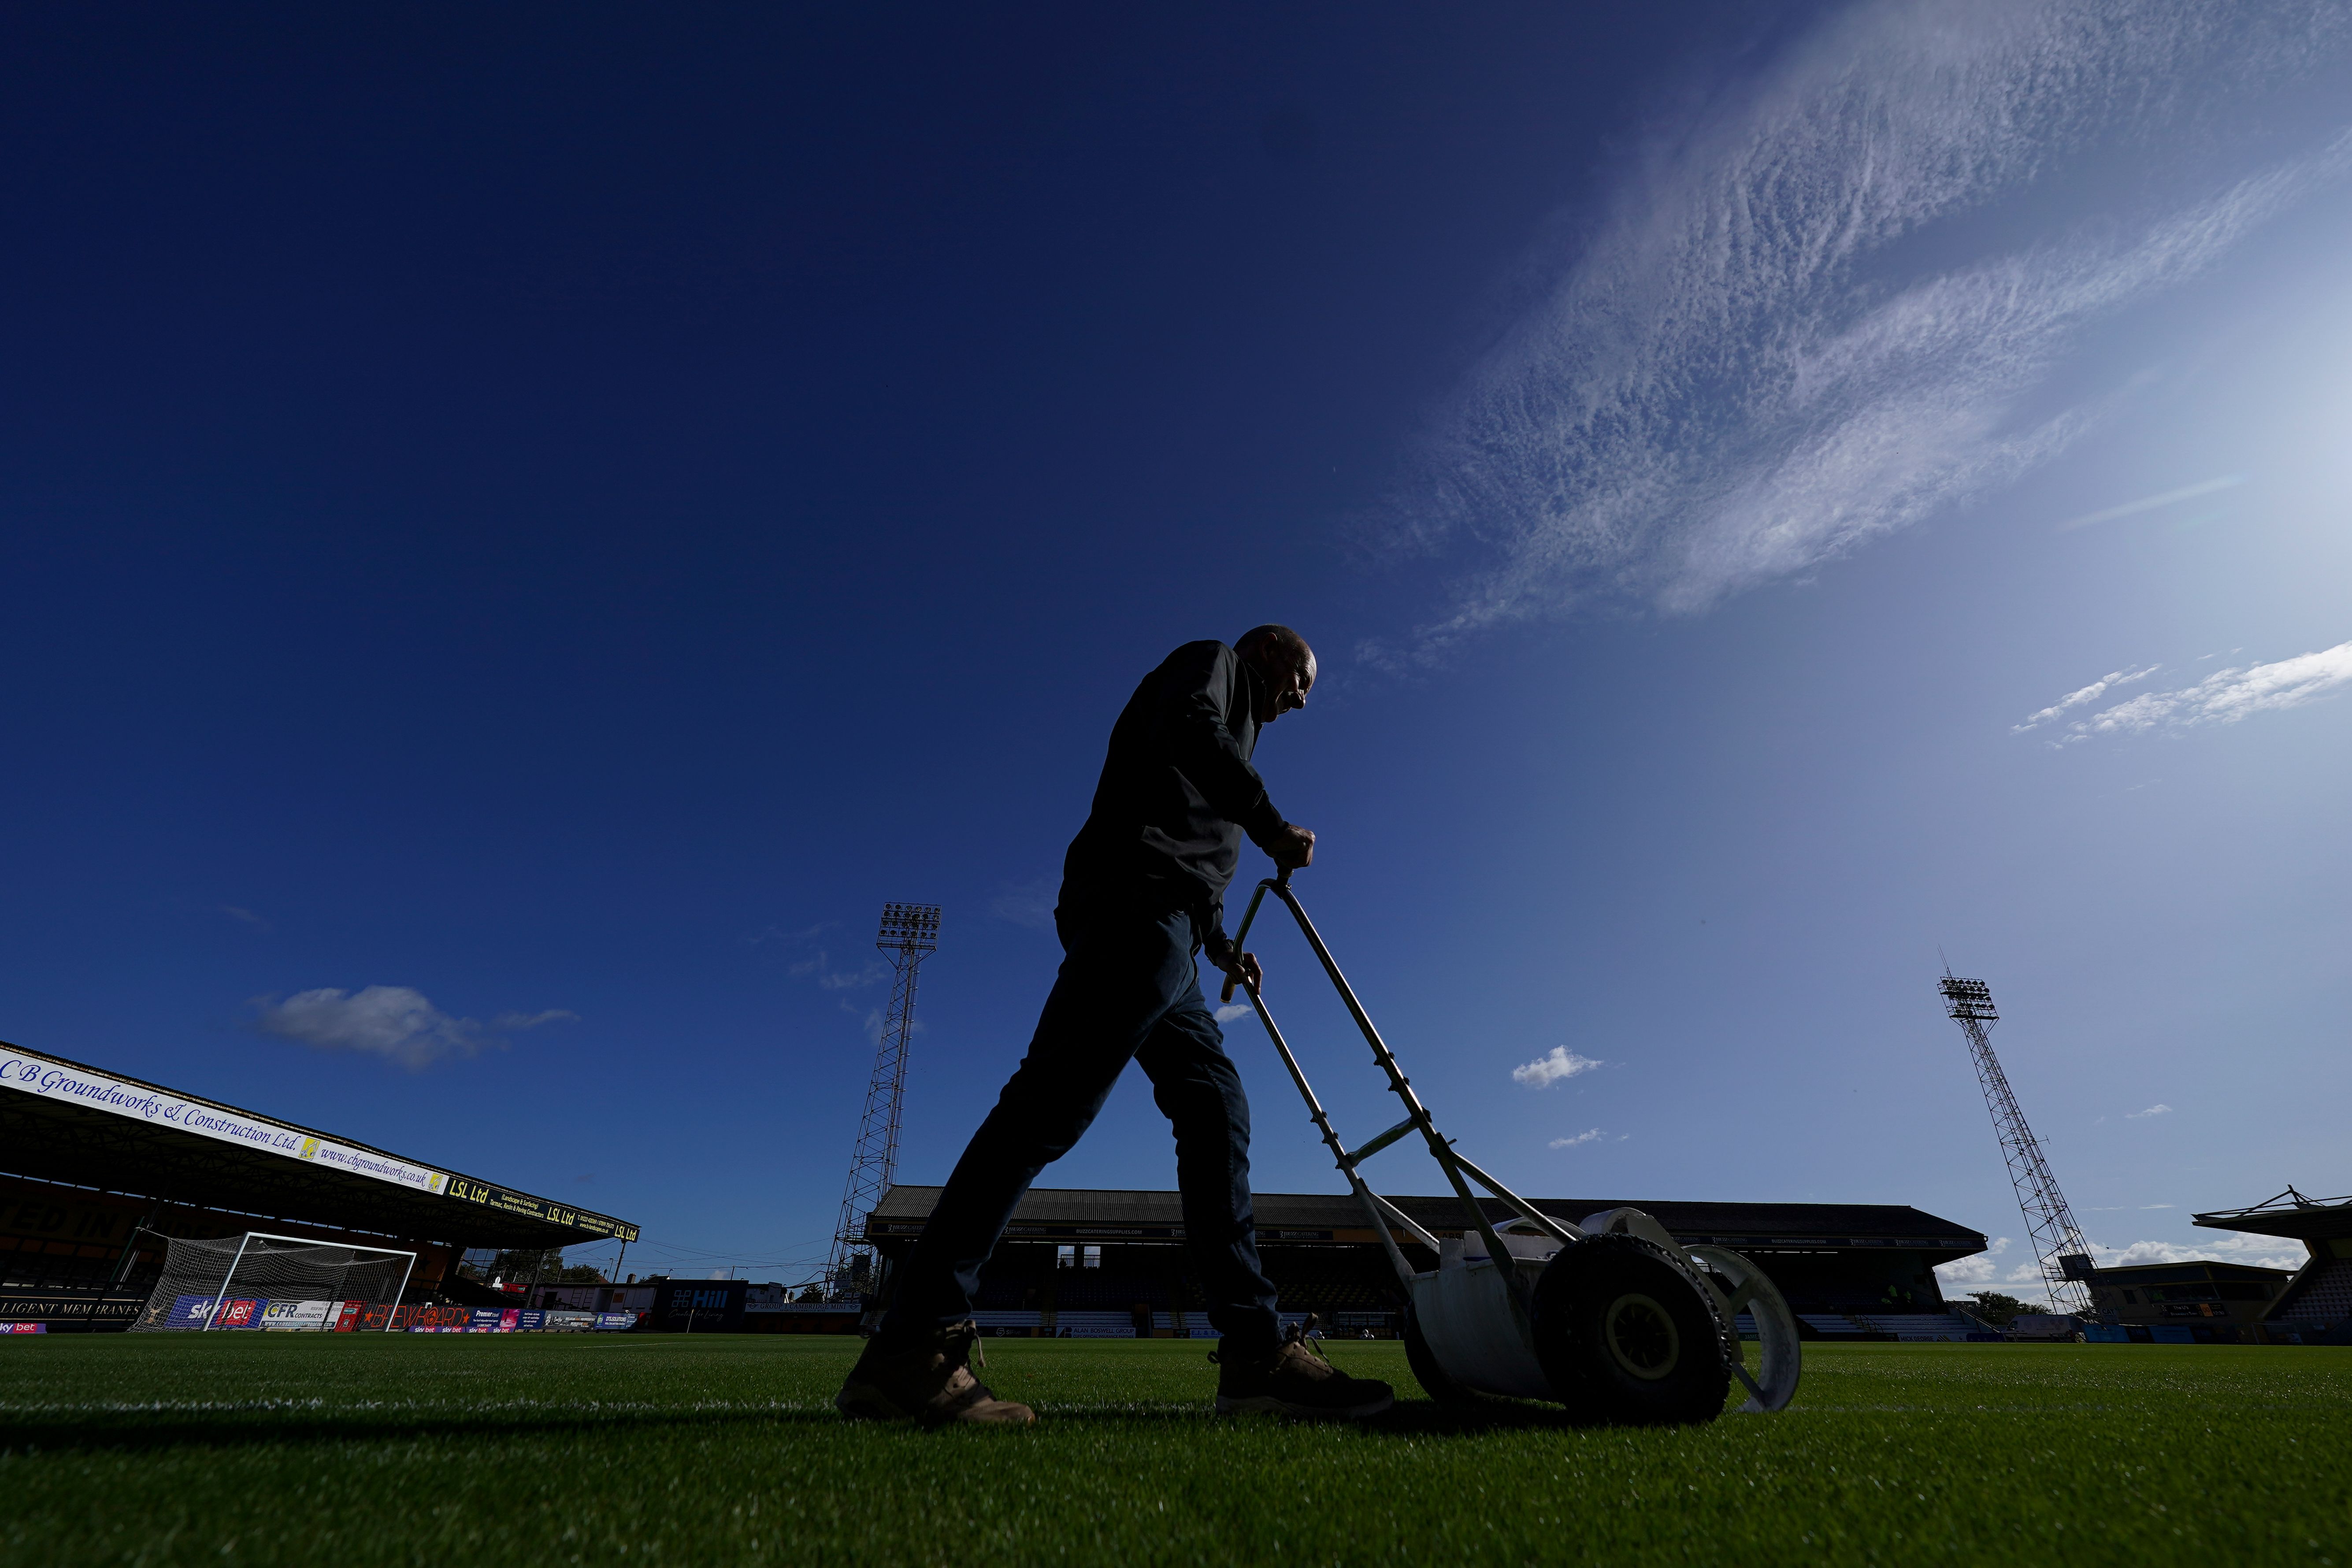 Ian Darler cuts the grass at the Cledara Abbey Stadium